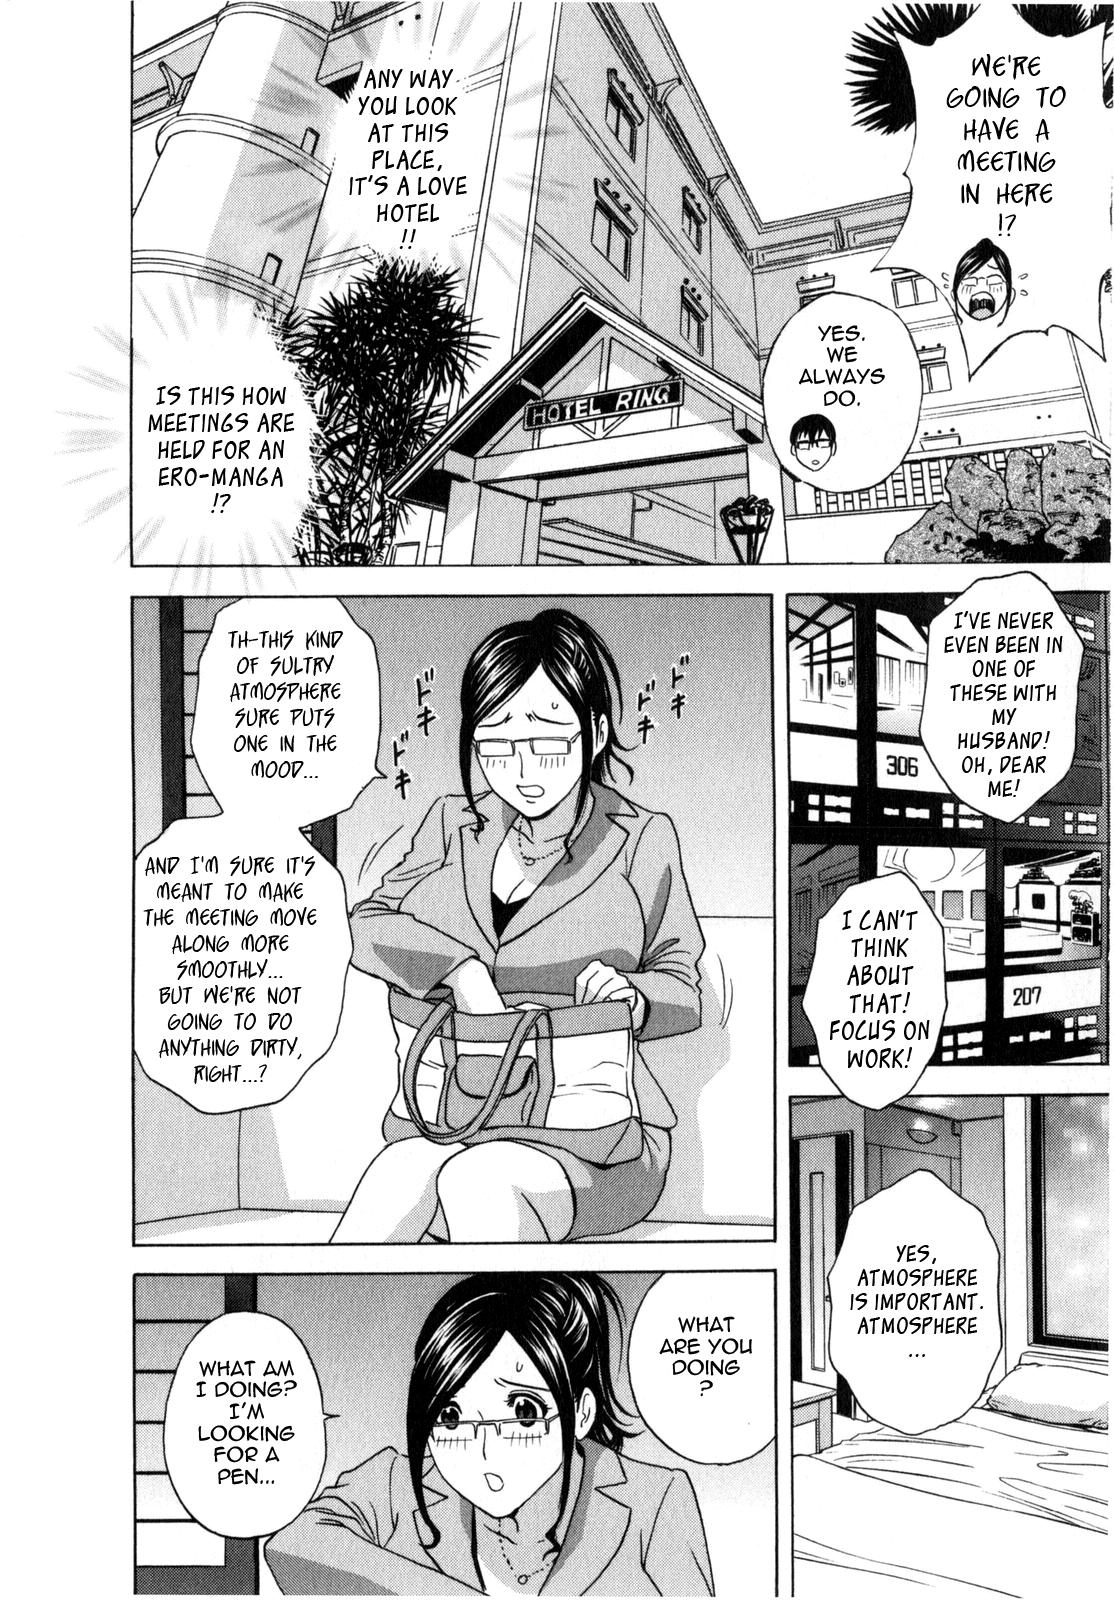 Life with Married Women Just Like a Manga 2 - Ch. 1 15